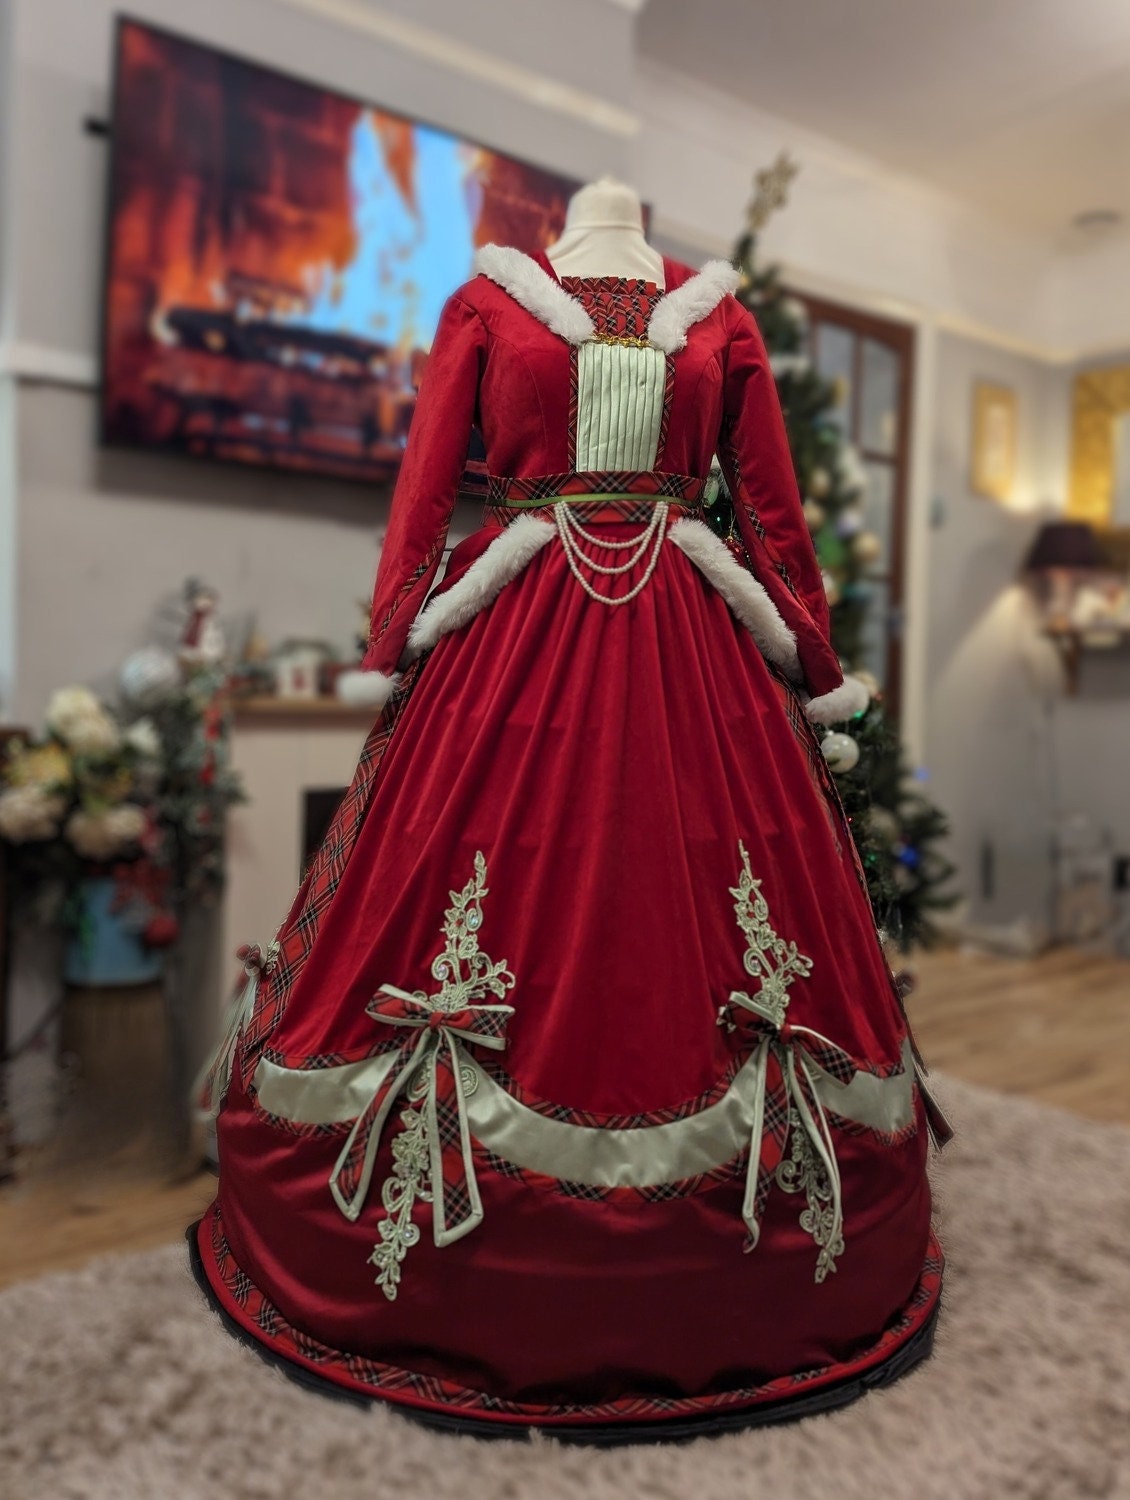 Authentic Santa corset dress with fluffy skirt, red Christmas velvet dress.  Prom, Valentine, mini wedding dress